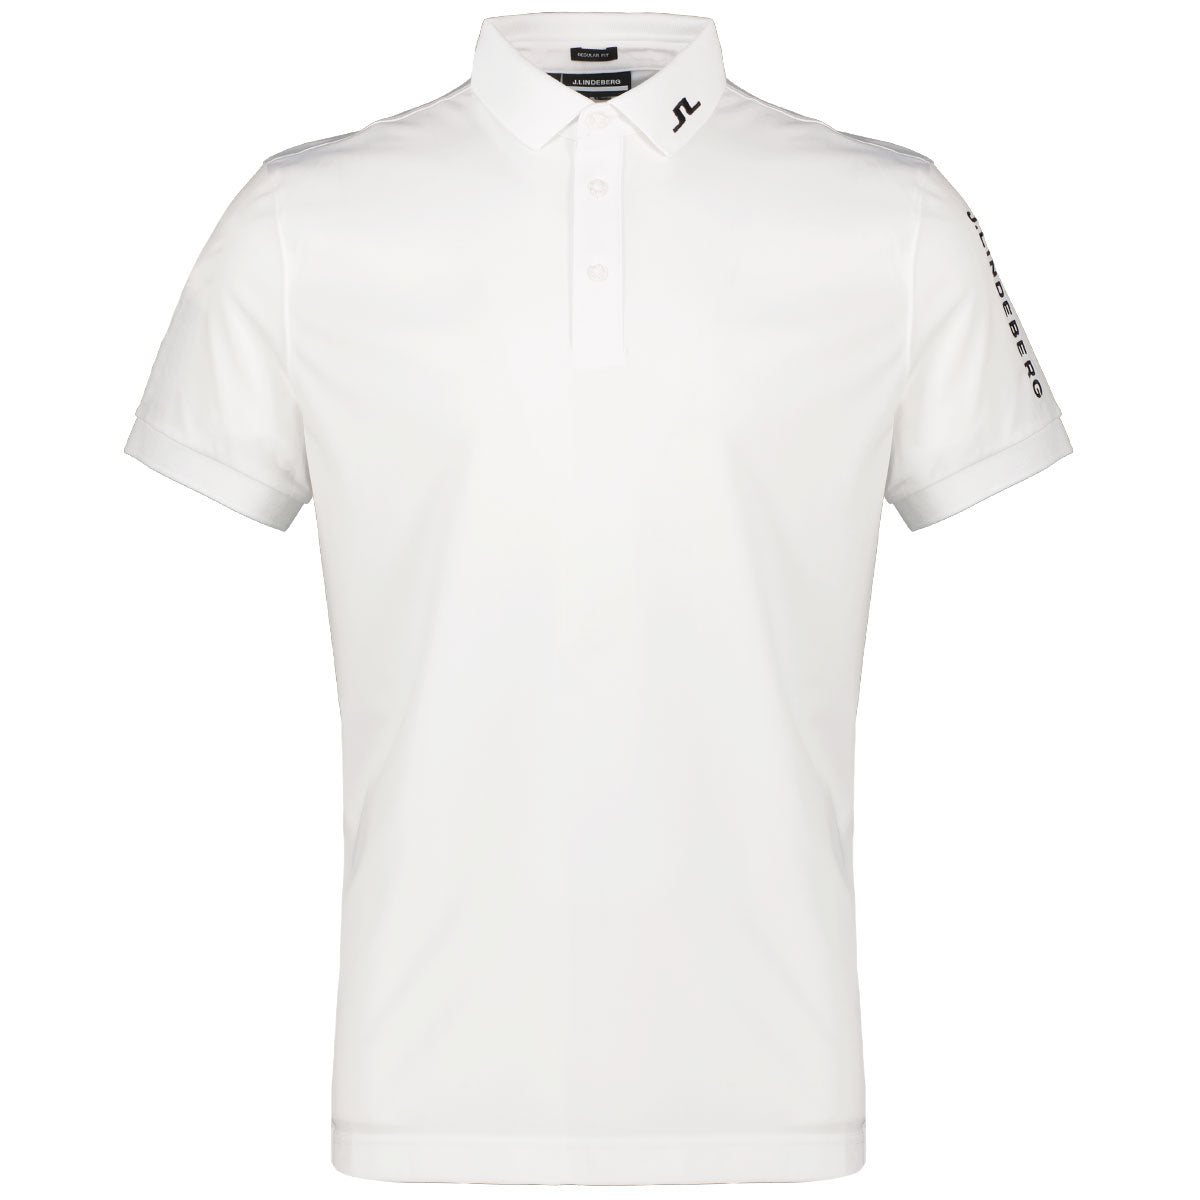 J. Lindeberg Tour Tech Golf Polo Shirt GMJT06337